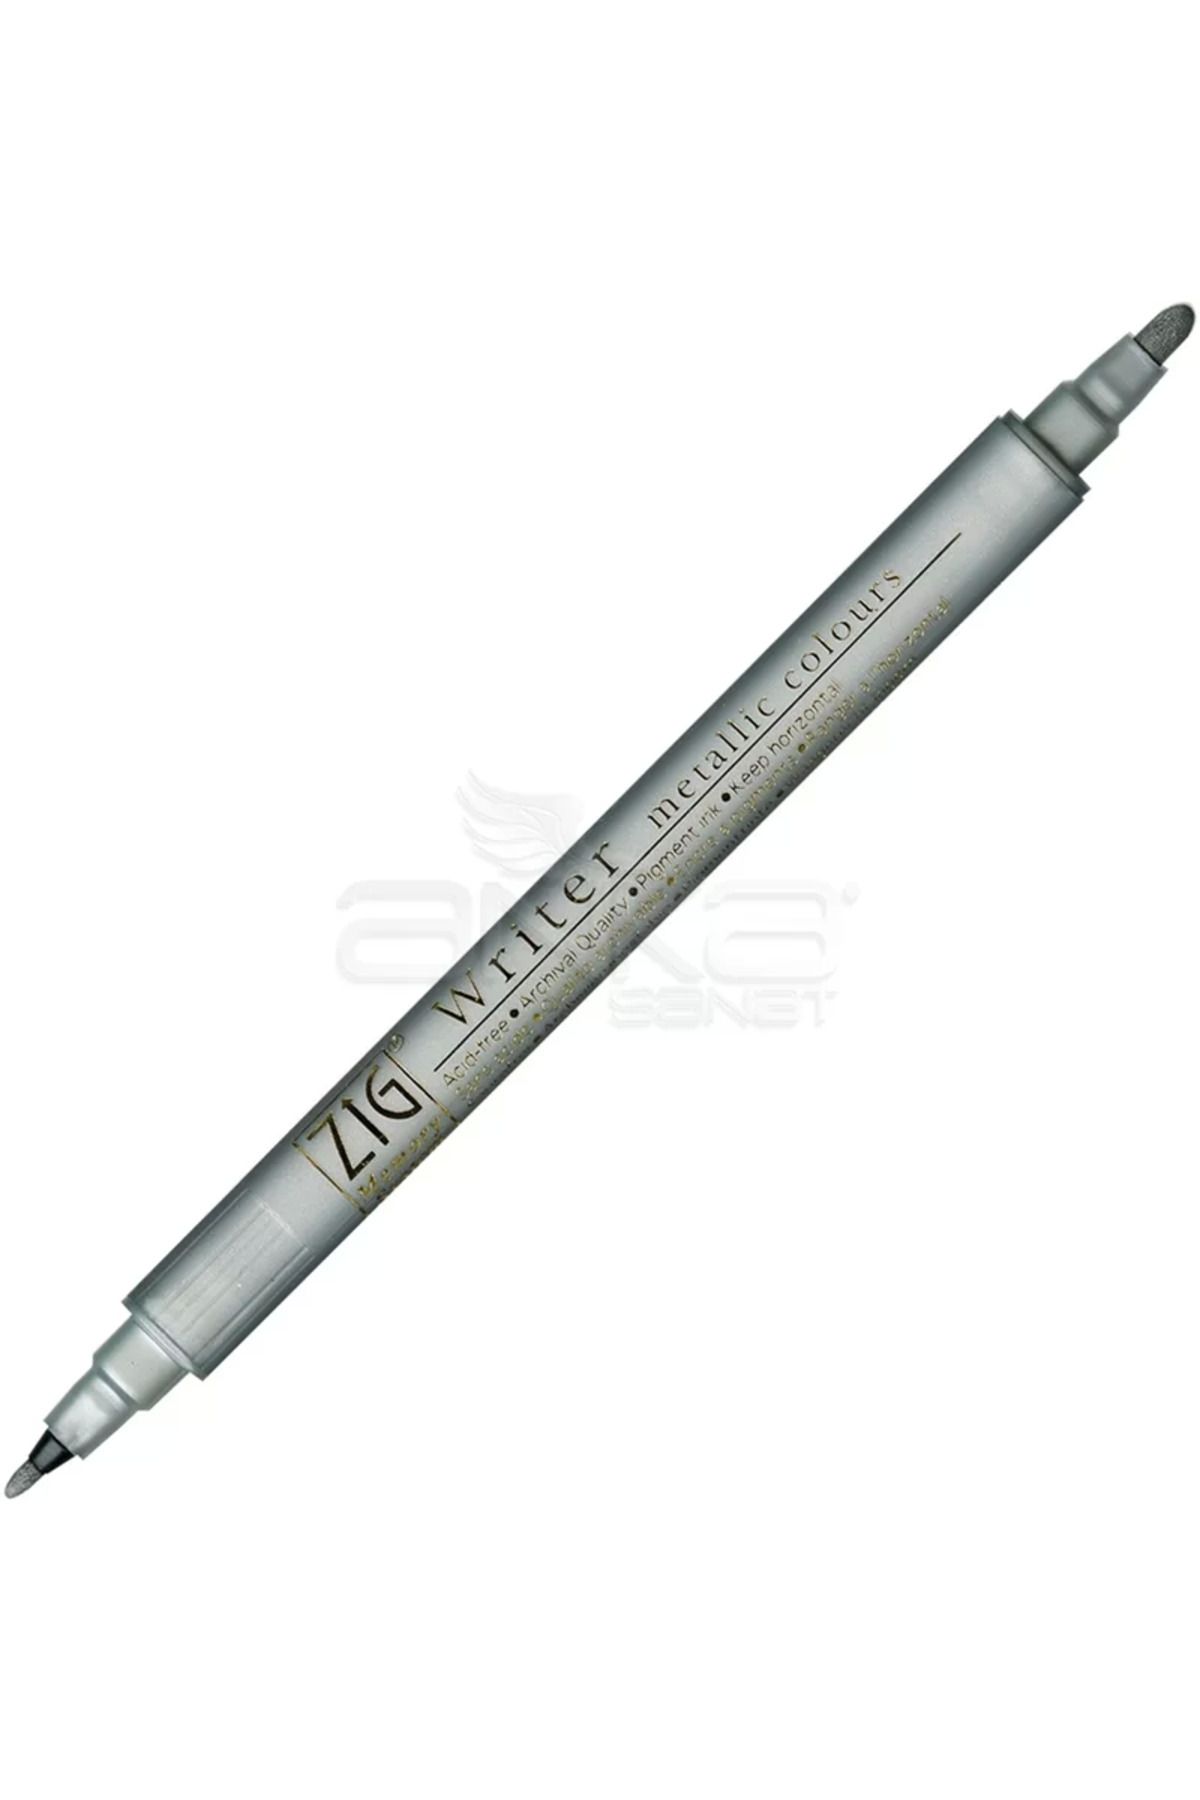 Zig Writer Metallic Colours Çift Uçlu Marker Kalem 102 Silver